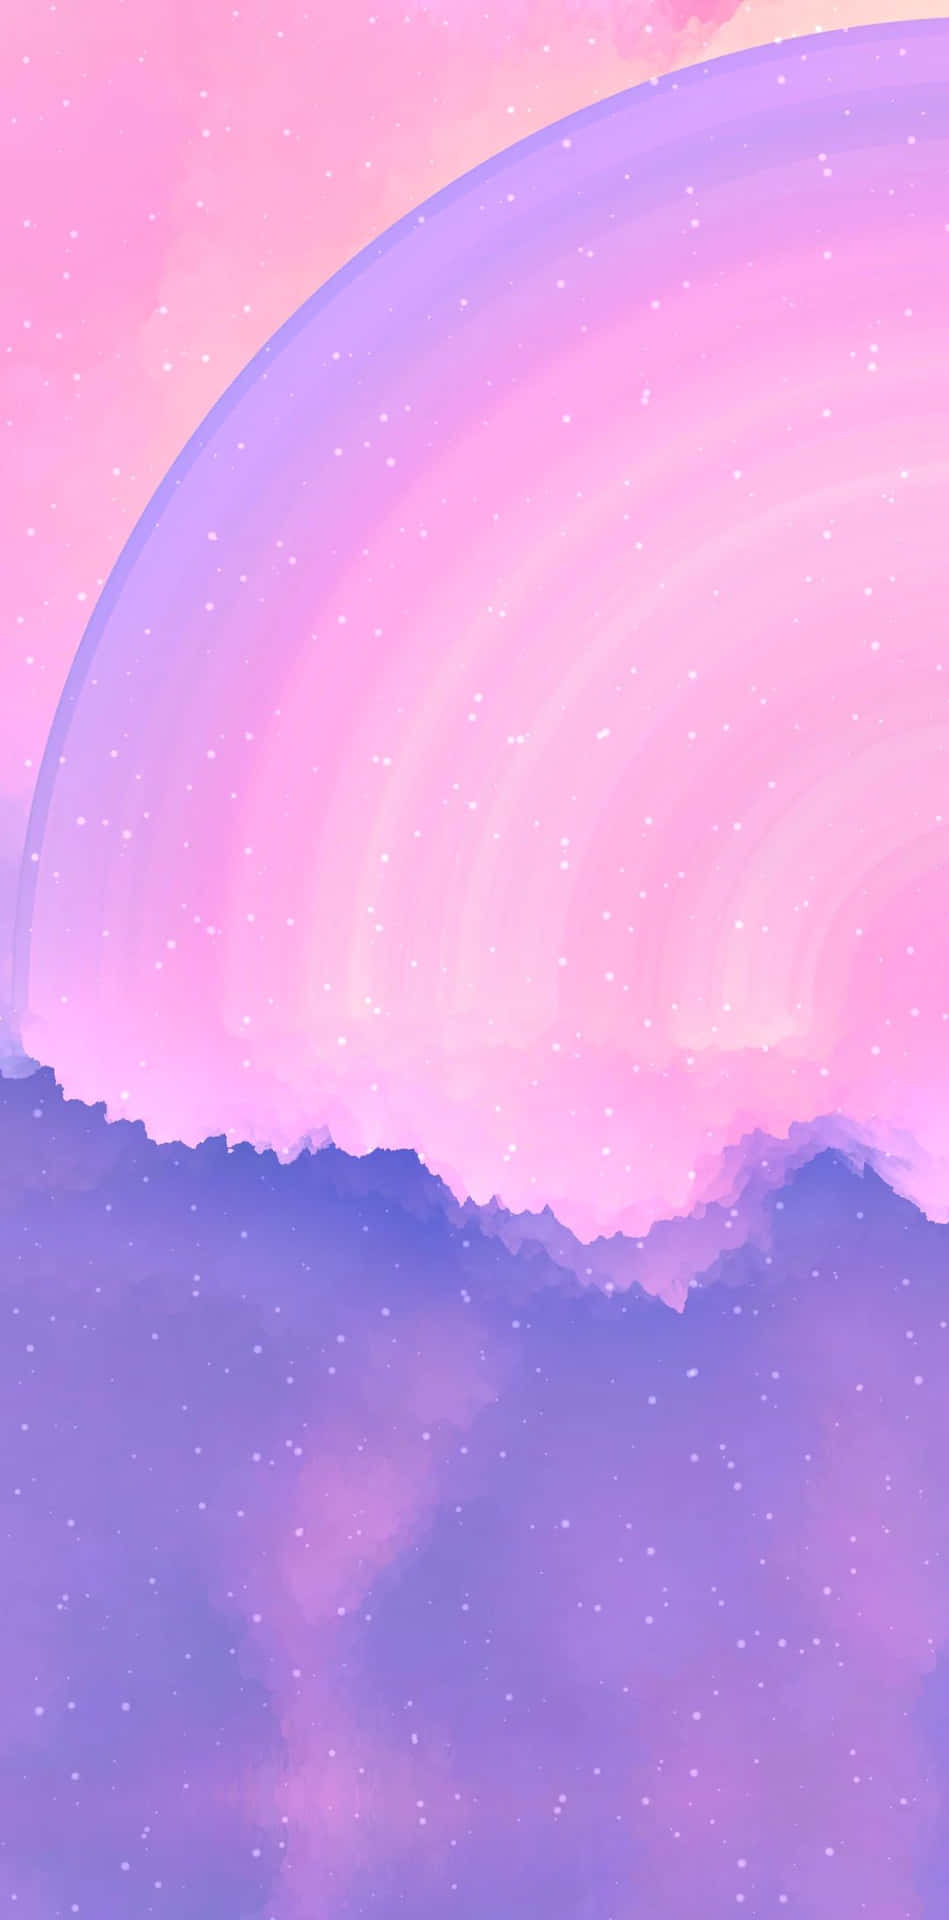 Pastel Planet Rising Over Mountains.jpg Wallpaper